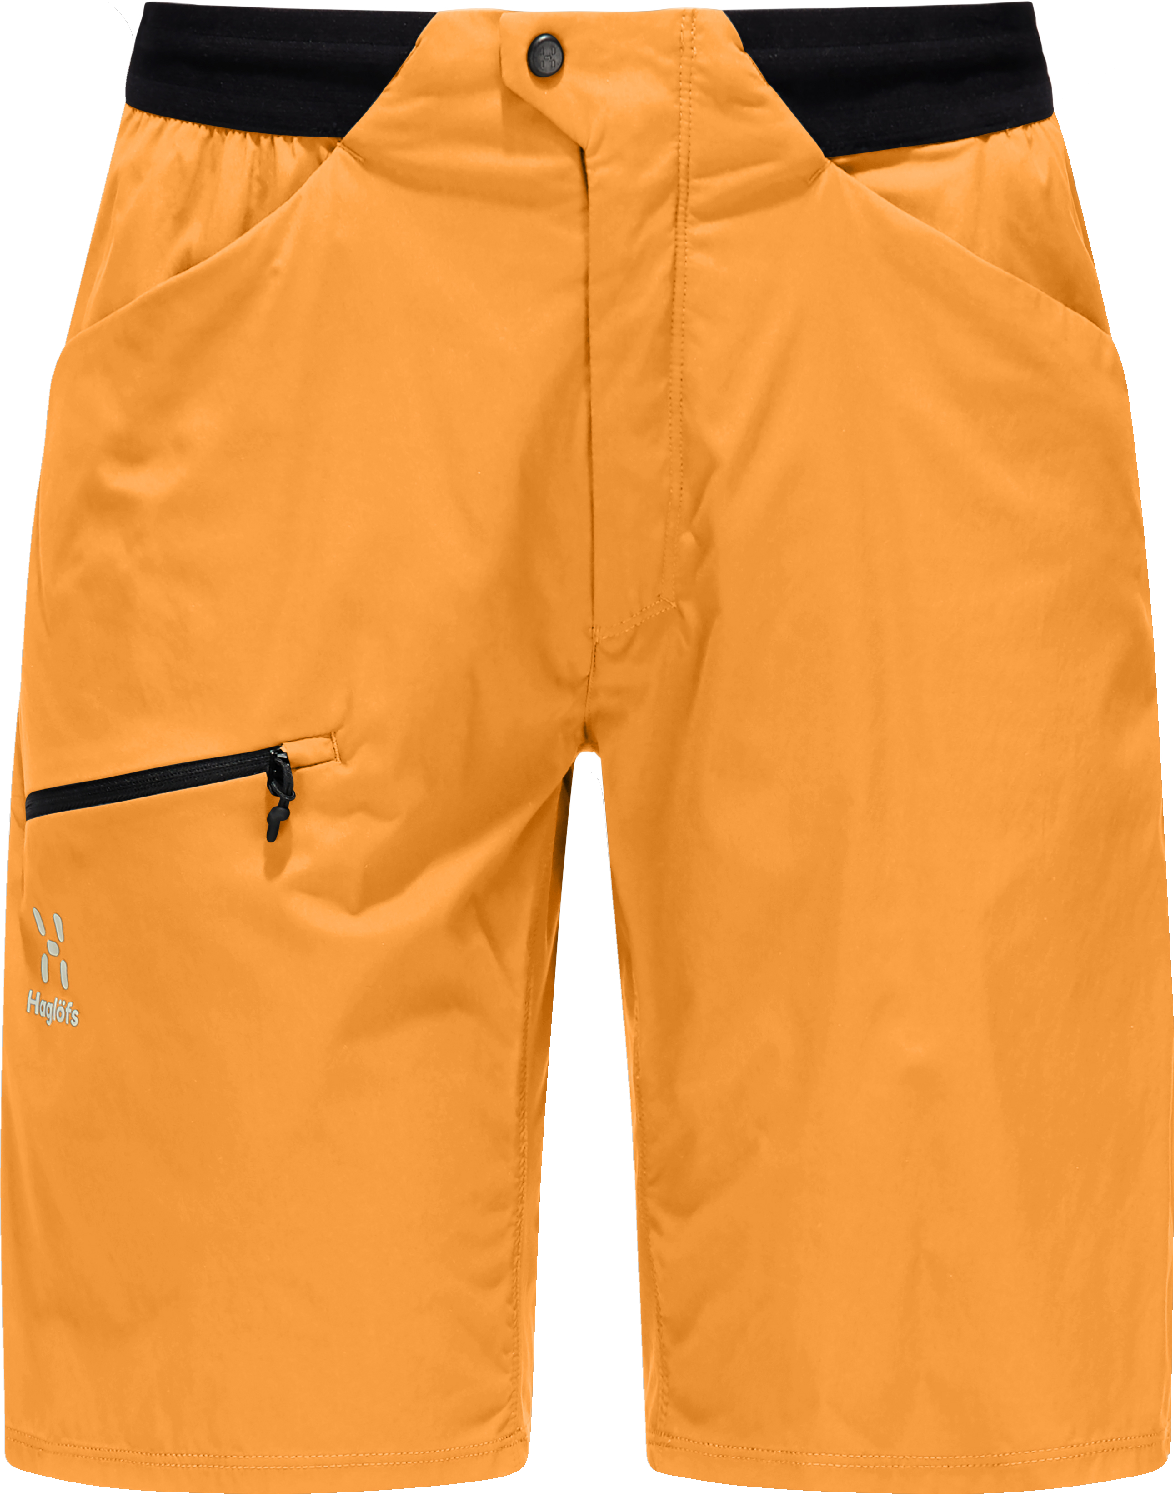 Haglöfs Women’s L.I.M Fuse Shorts Desert Yellow